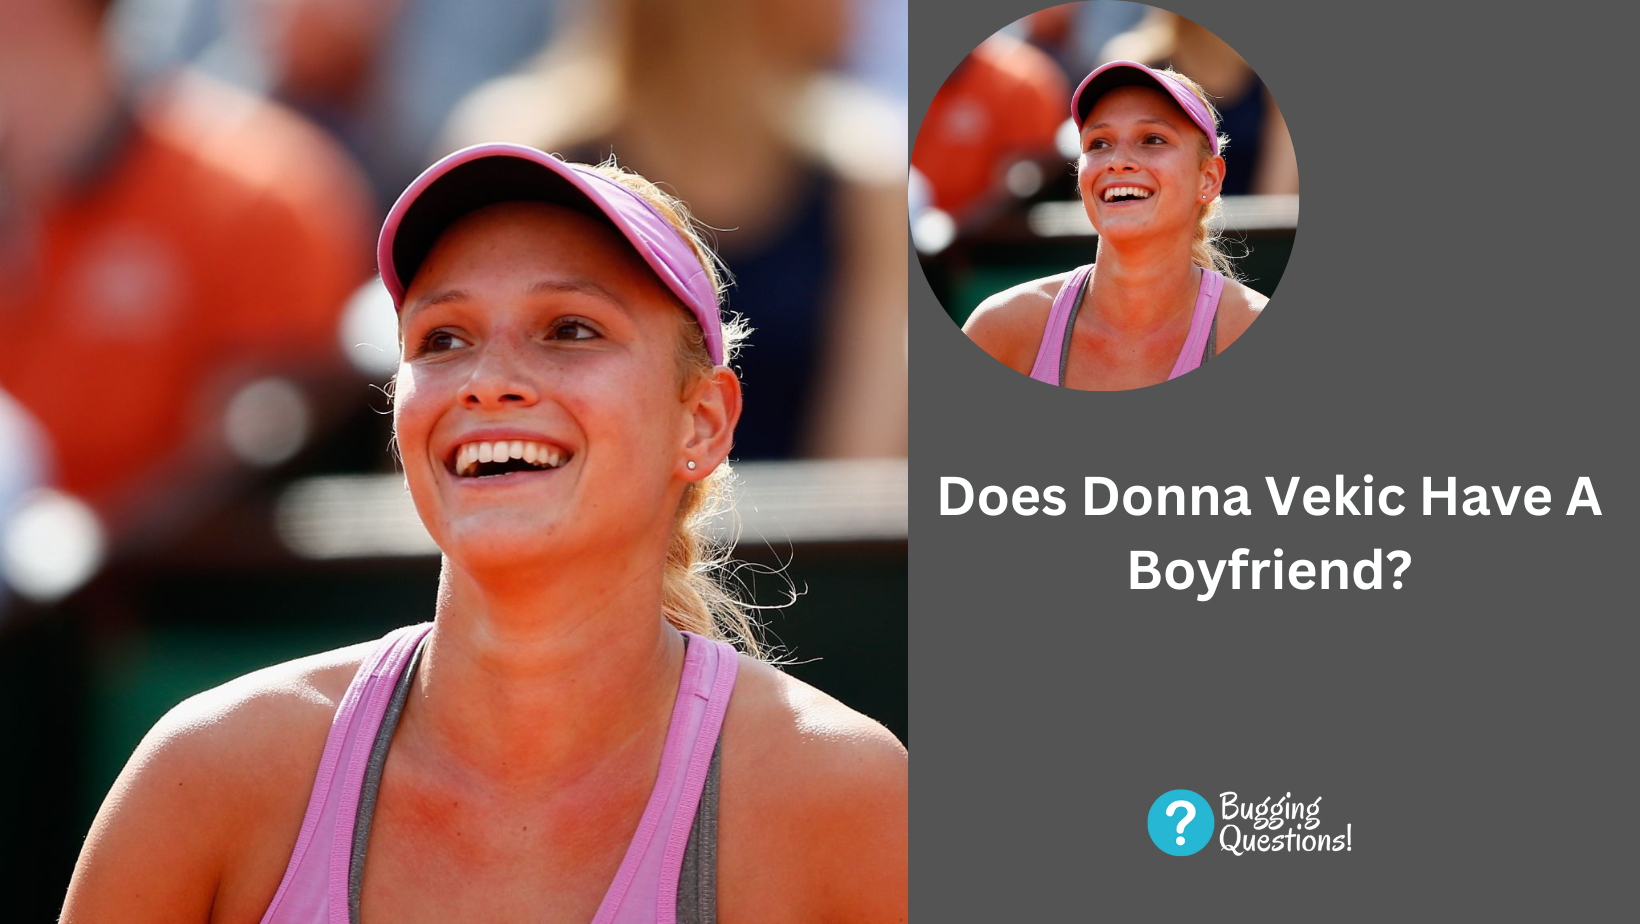 Does Donna Vekic Have A Boyfriend?